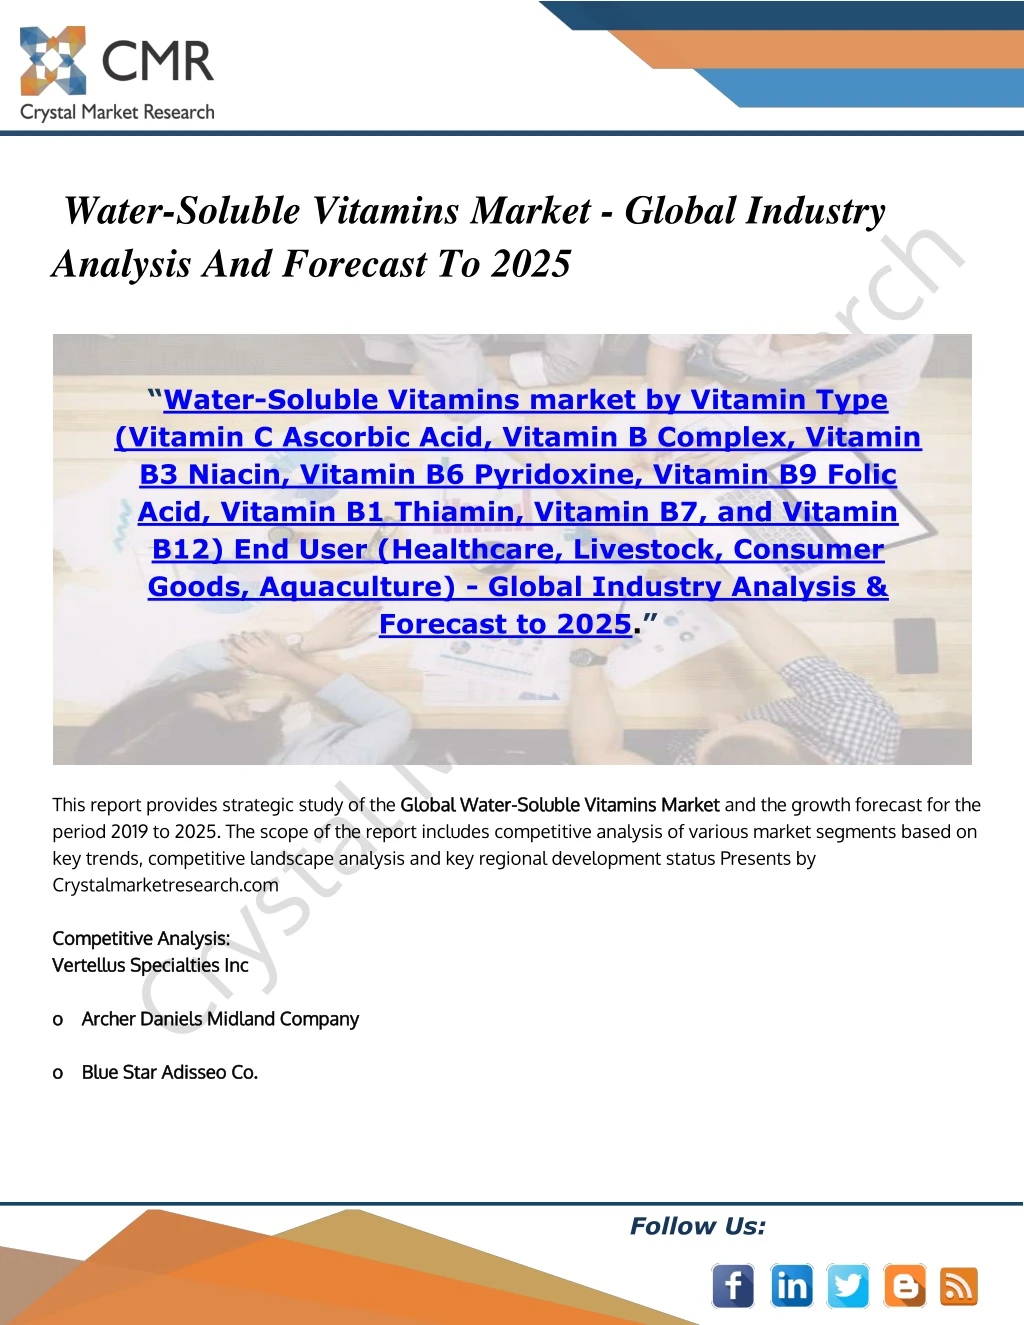 water soluble vitamins market global industry